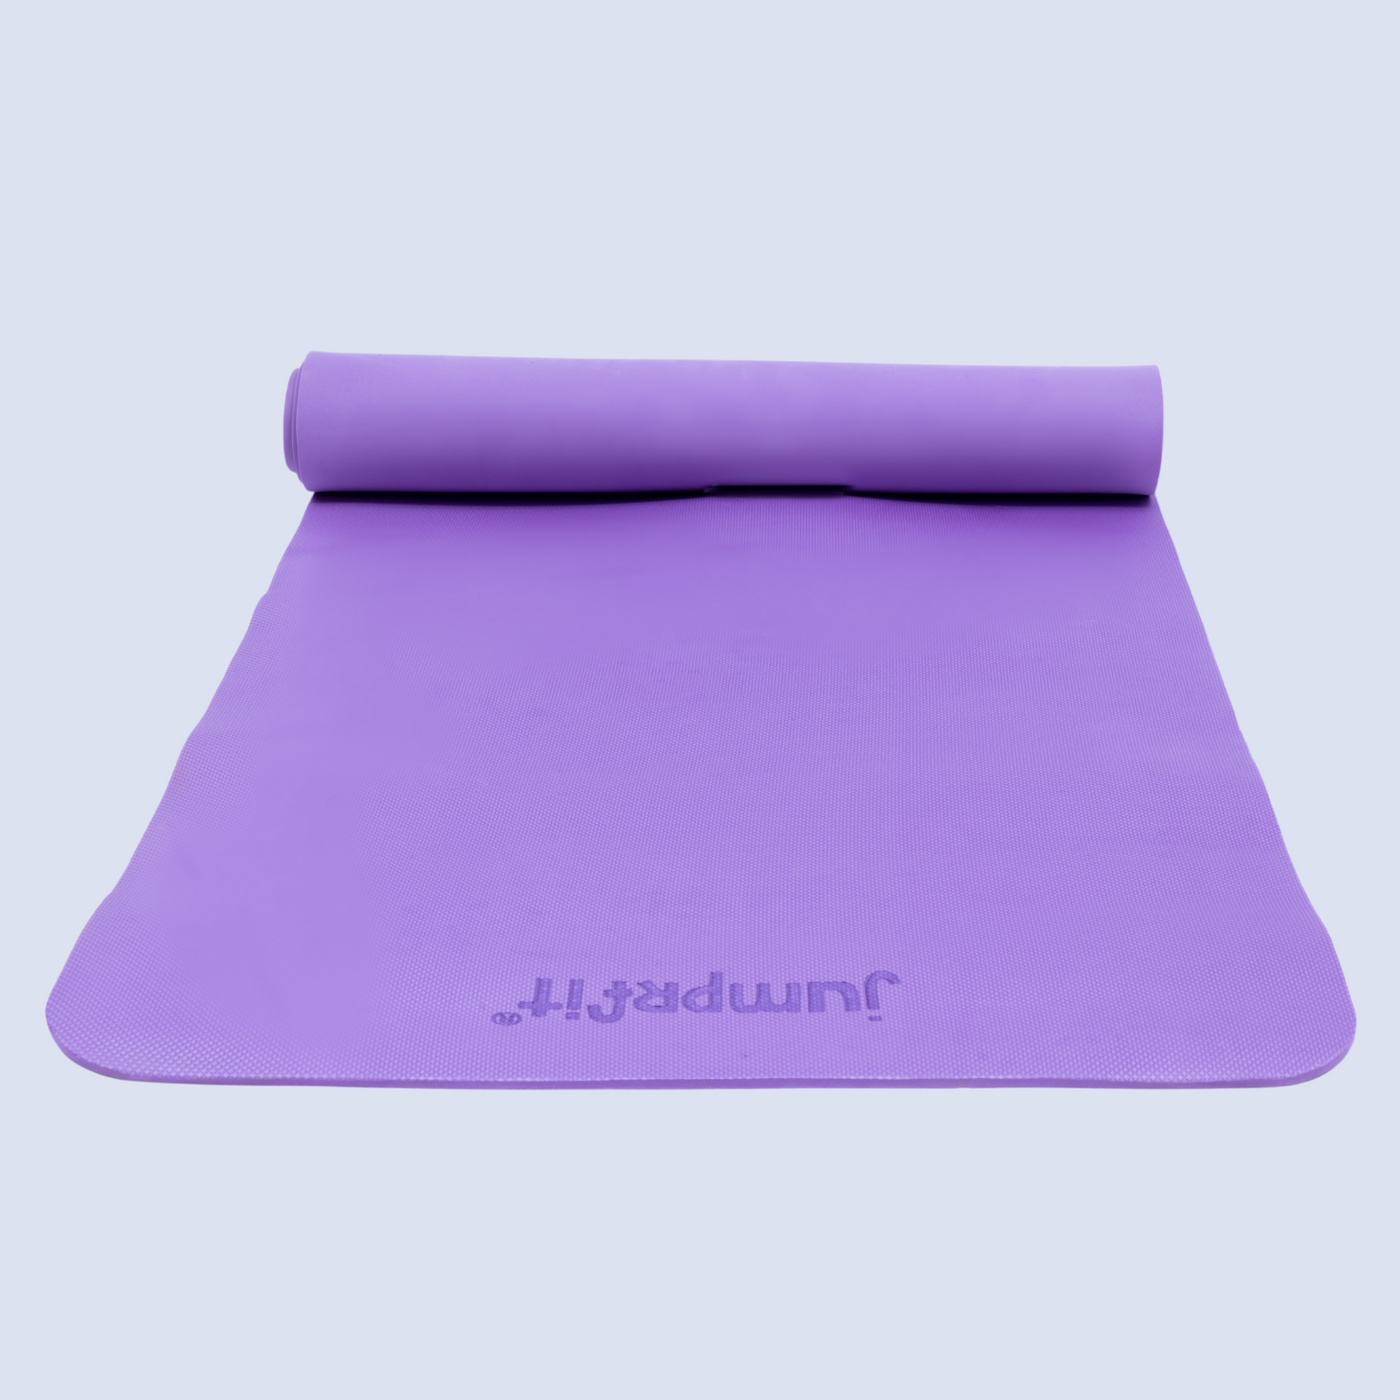 Buy Best Yoga Mats Online For Home Use - Jumprfit